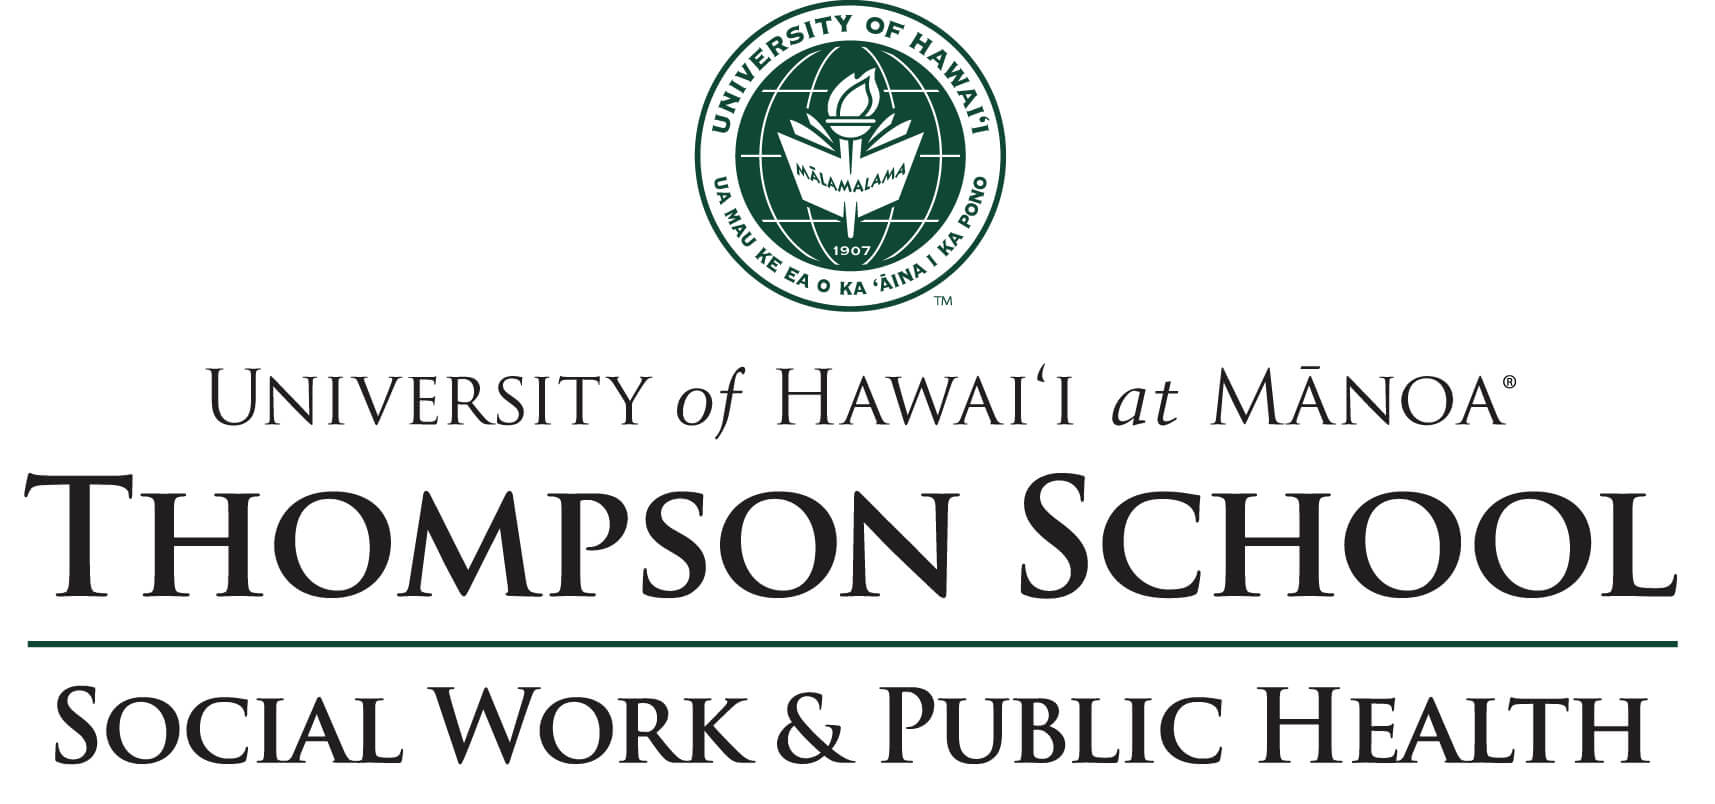 University of Hawaii at Manoa Thompson School Social Work and Public Health